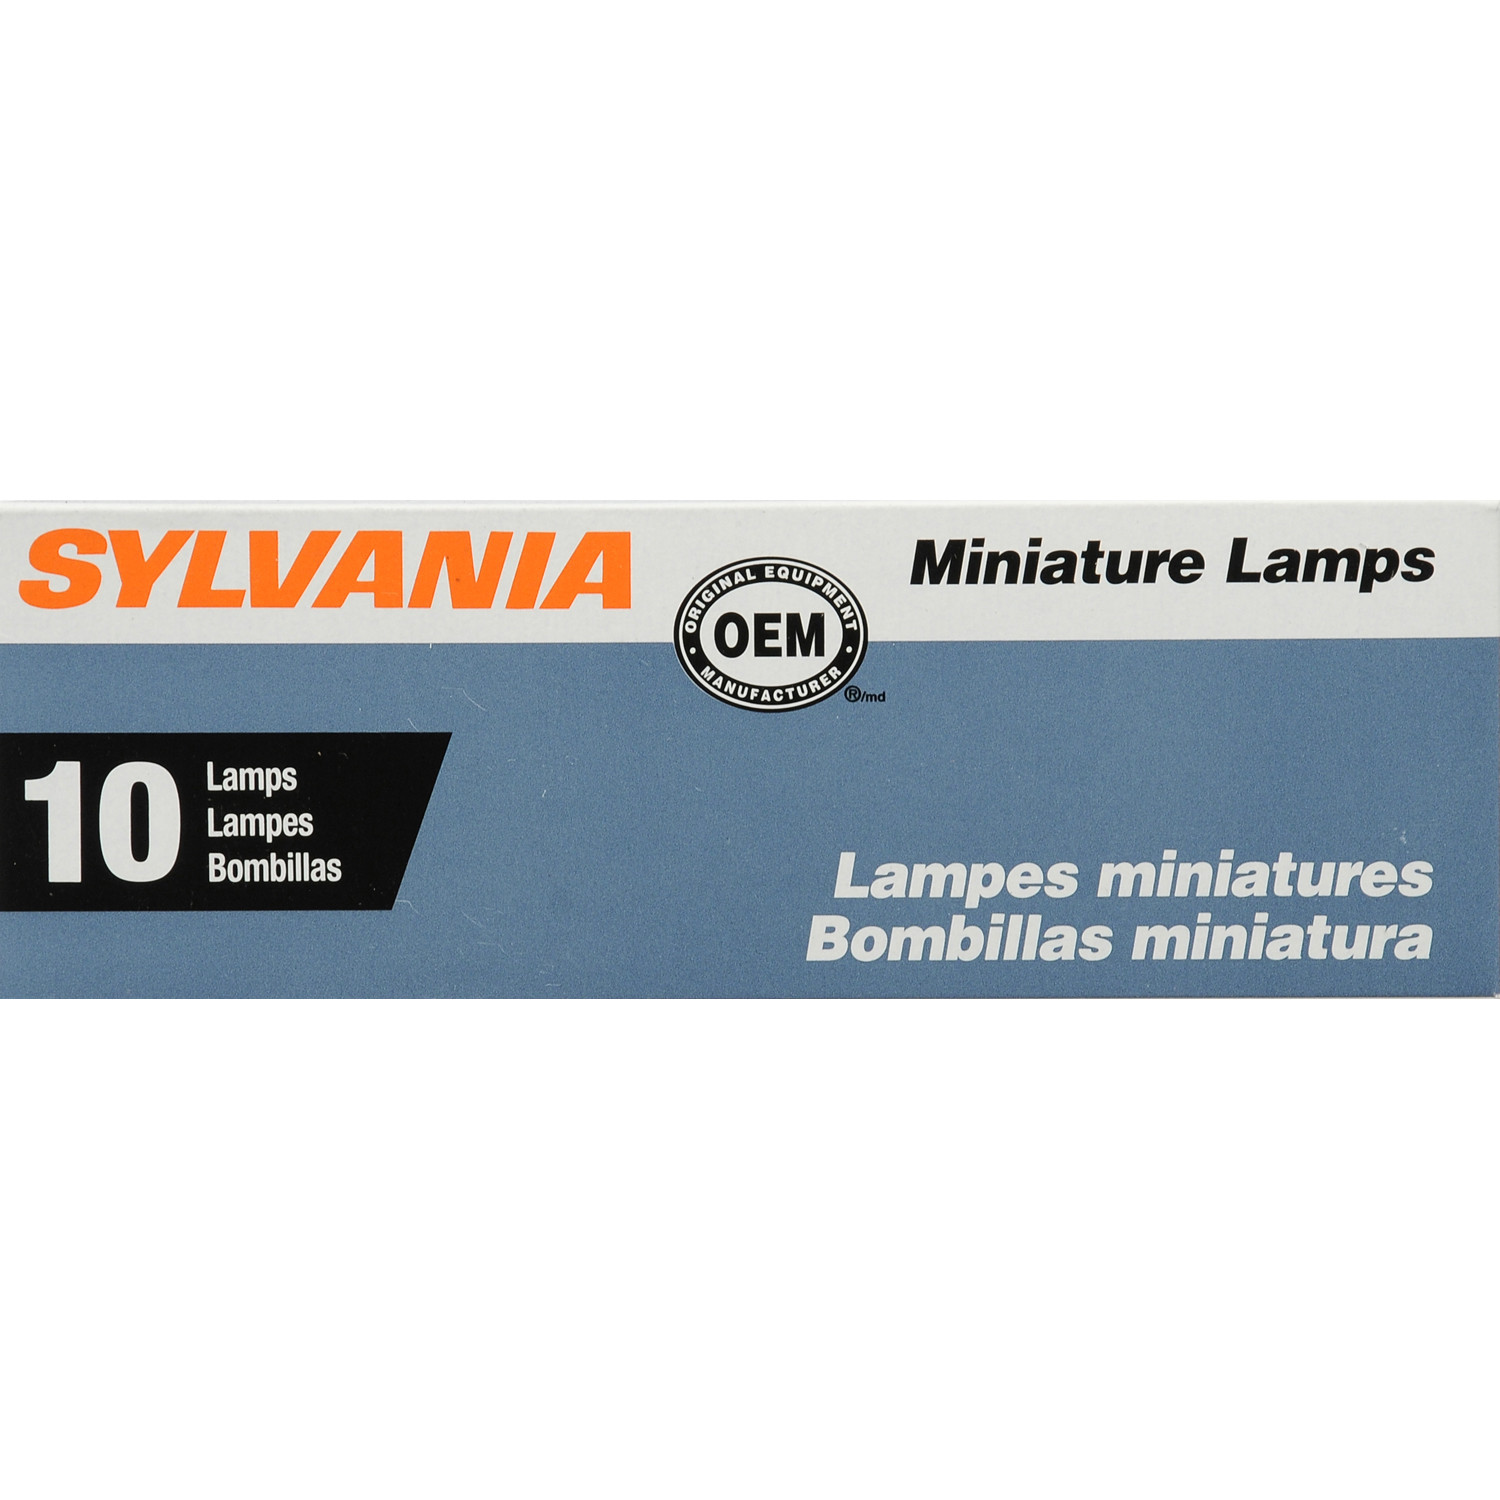 SYLVANIA RETAIL PACKS - 10-Pack Box Courtesy Light Bulb - SYR 89.TP